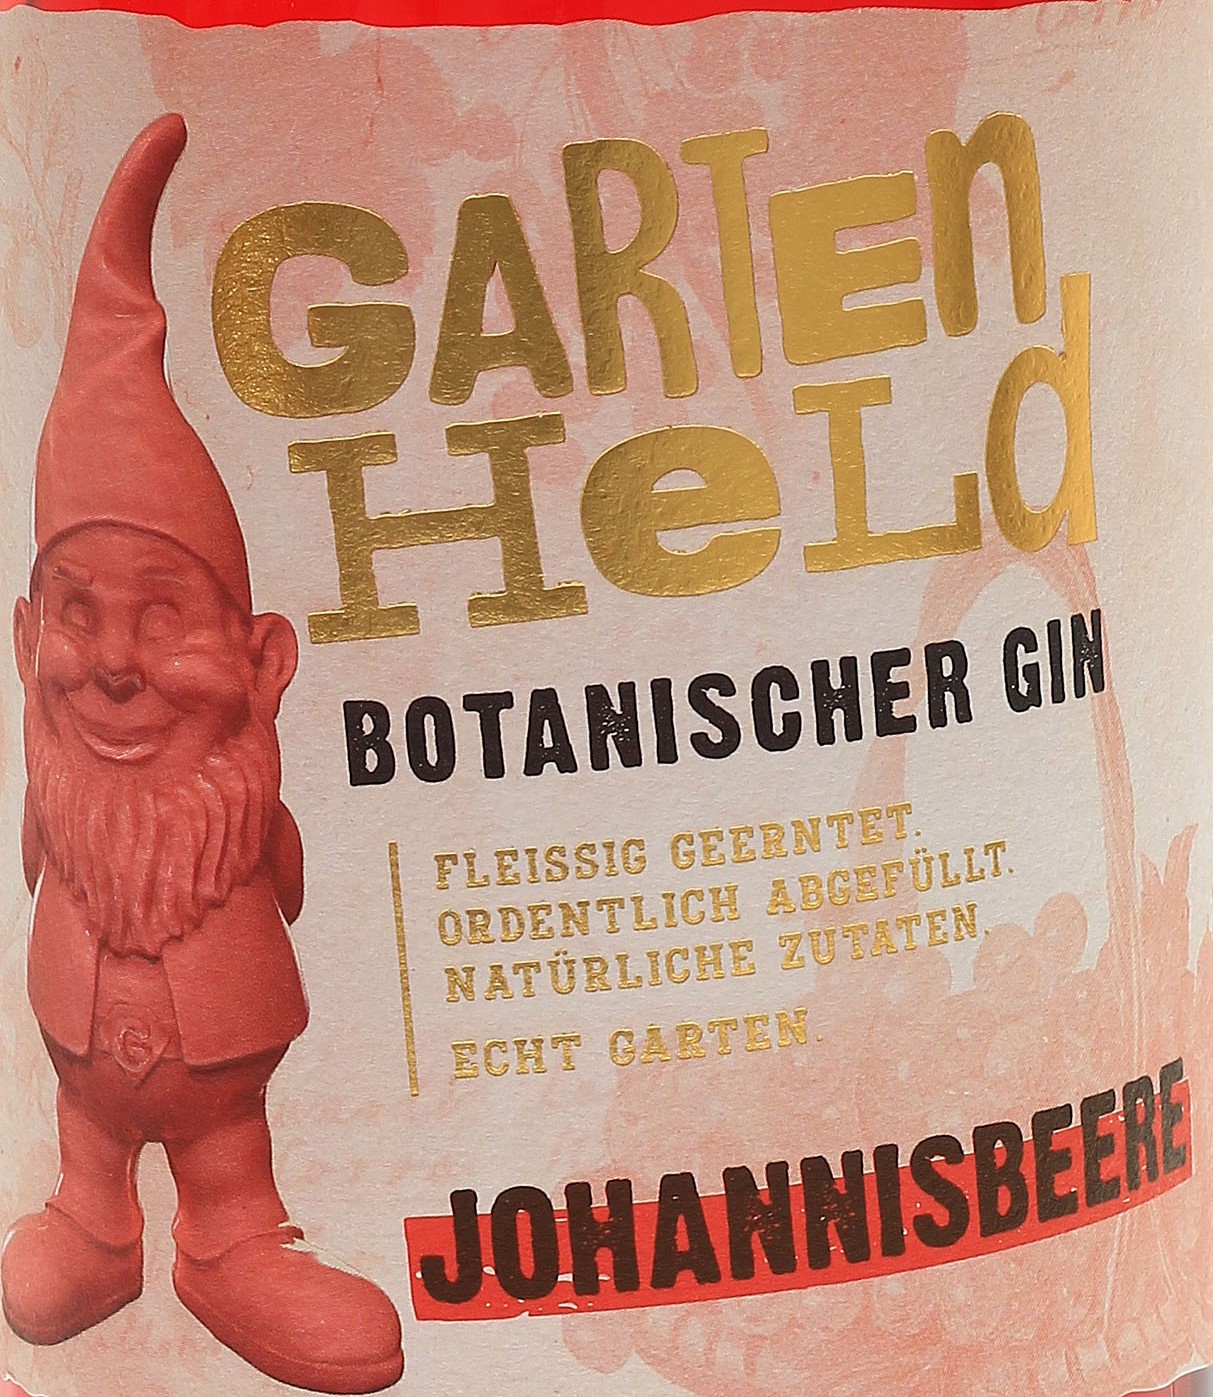 Gartenheld Botanischer Gin Johannisbeere 0,5 Liter - Be